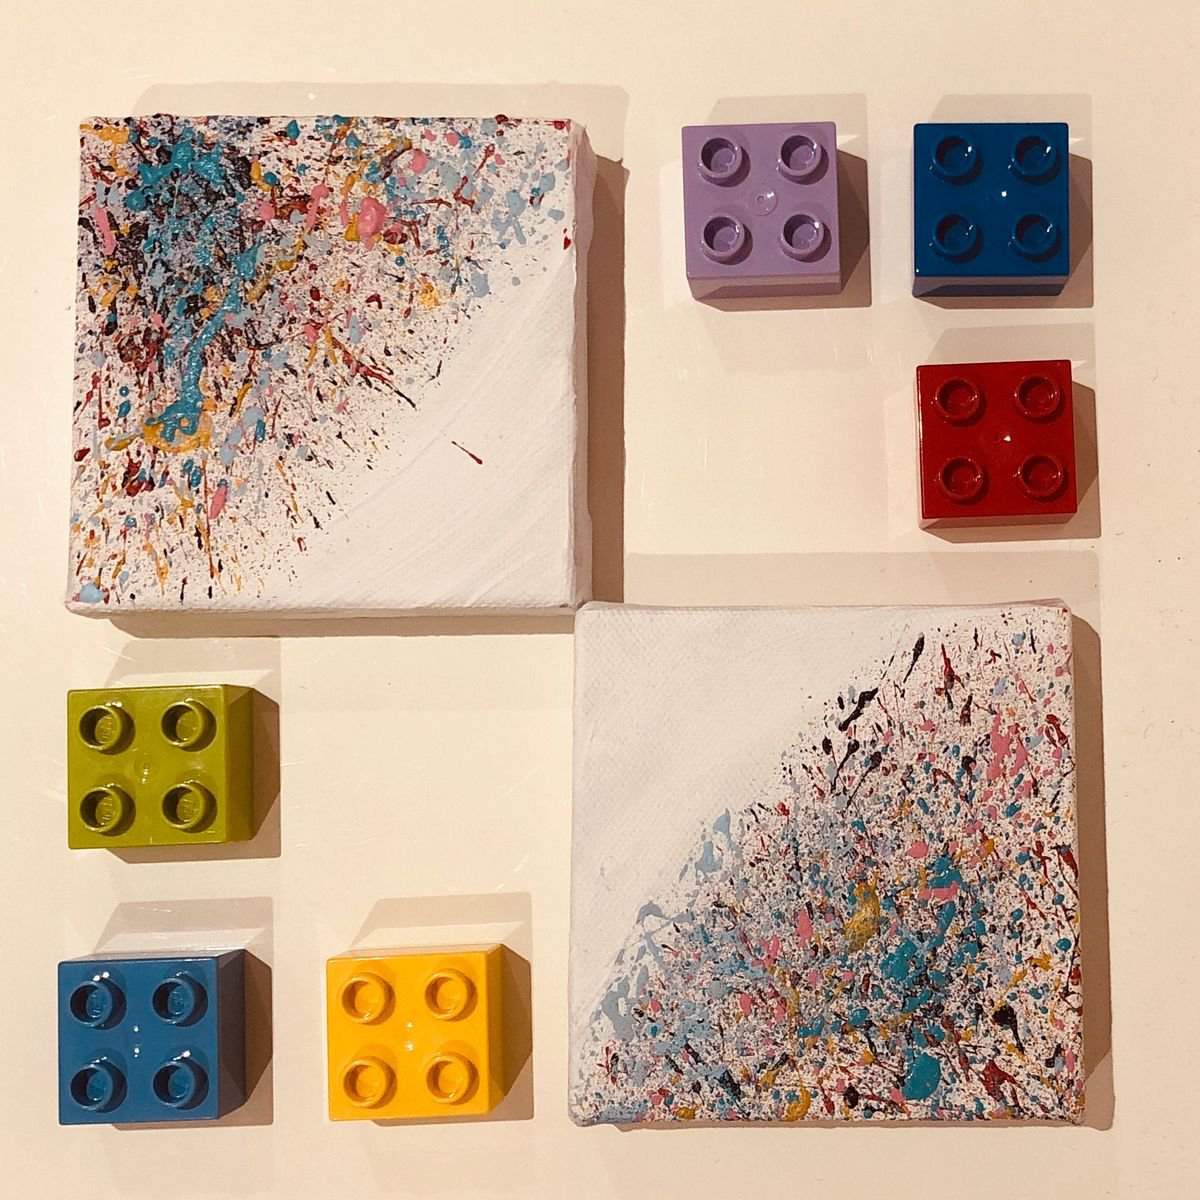 Confetti Miniature Set 1 by Elena Renaudiere